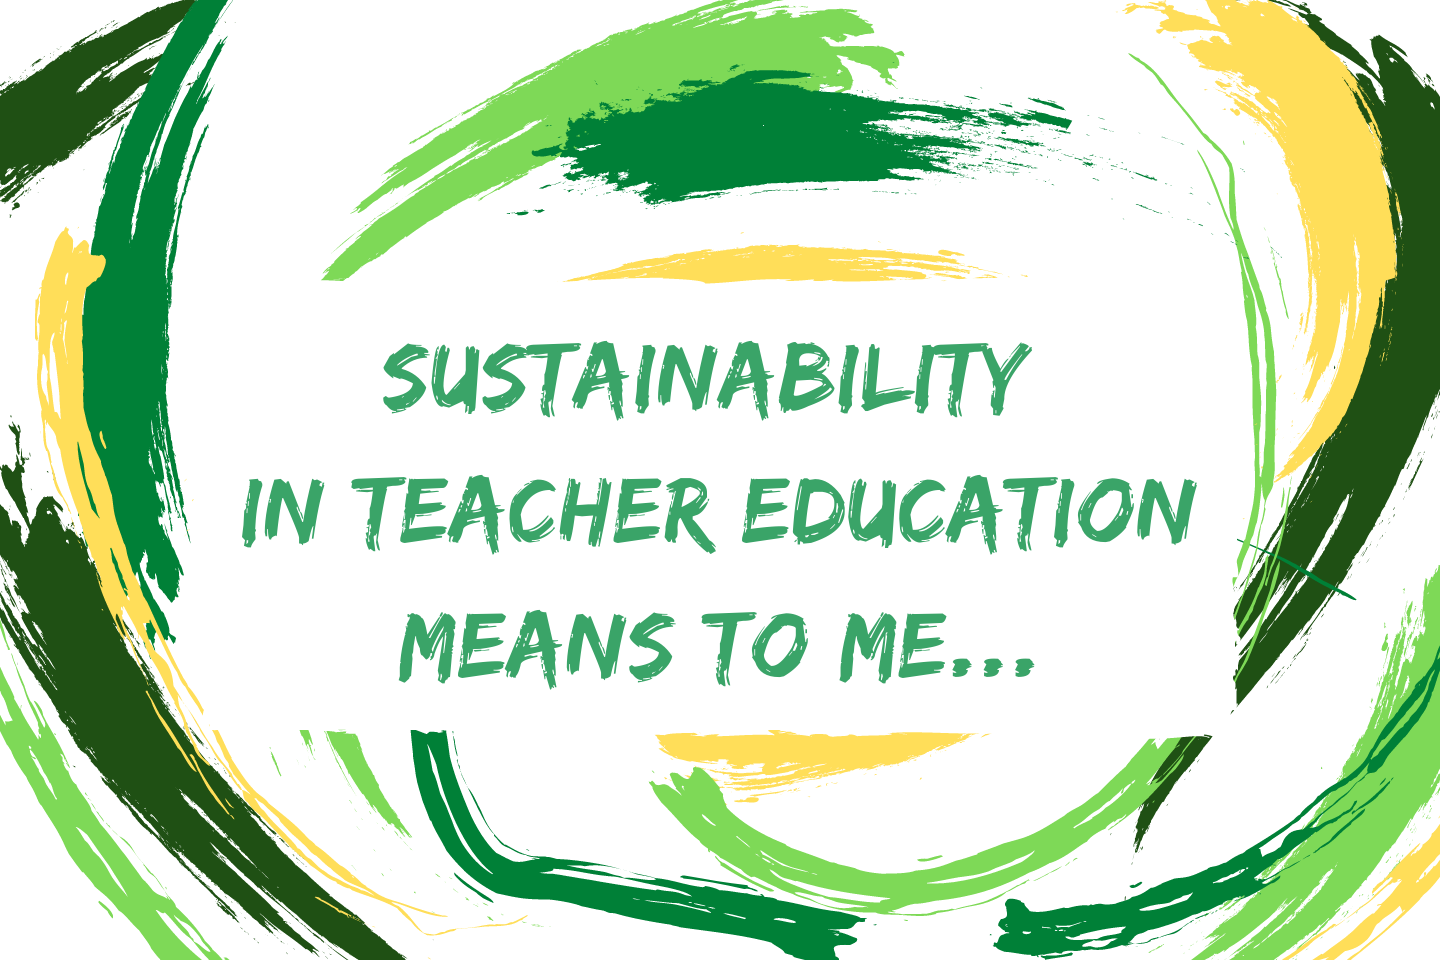 Sustainability in teacher education